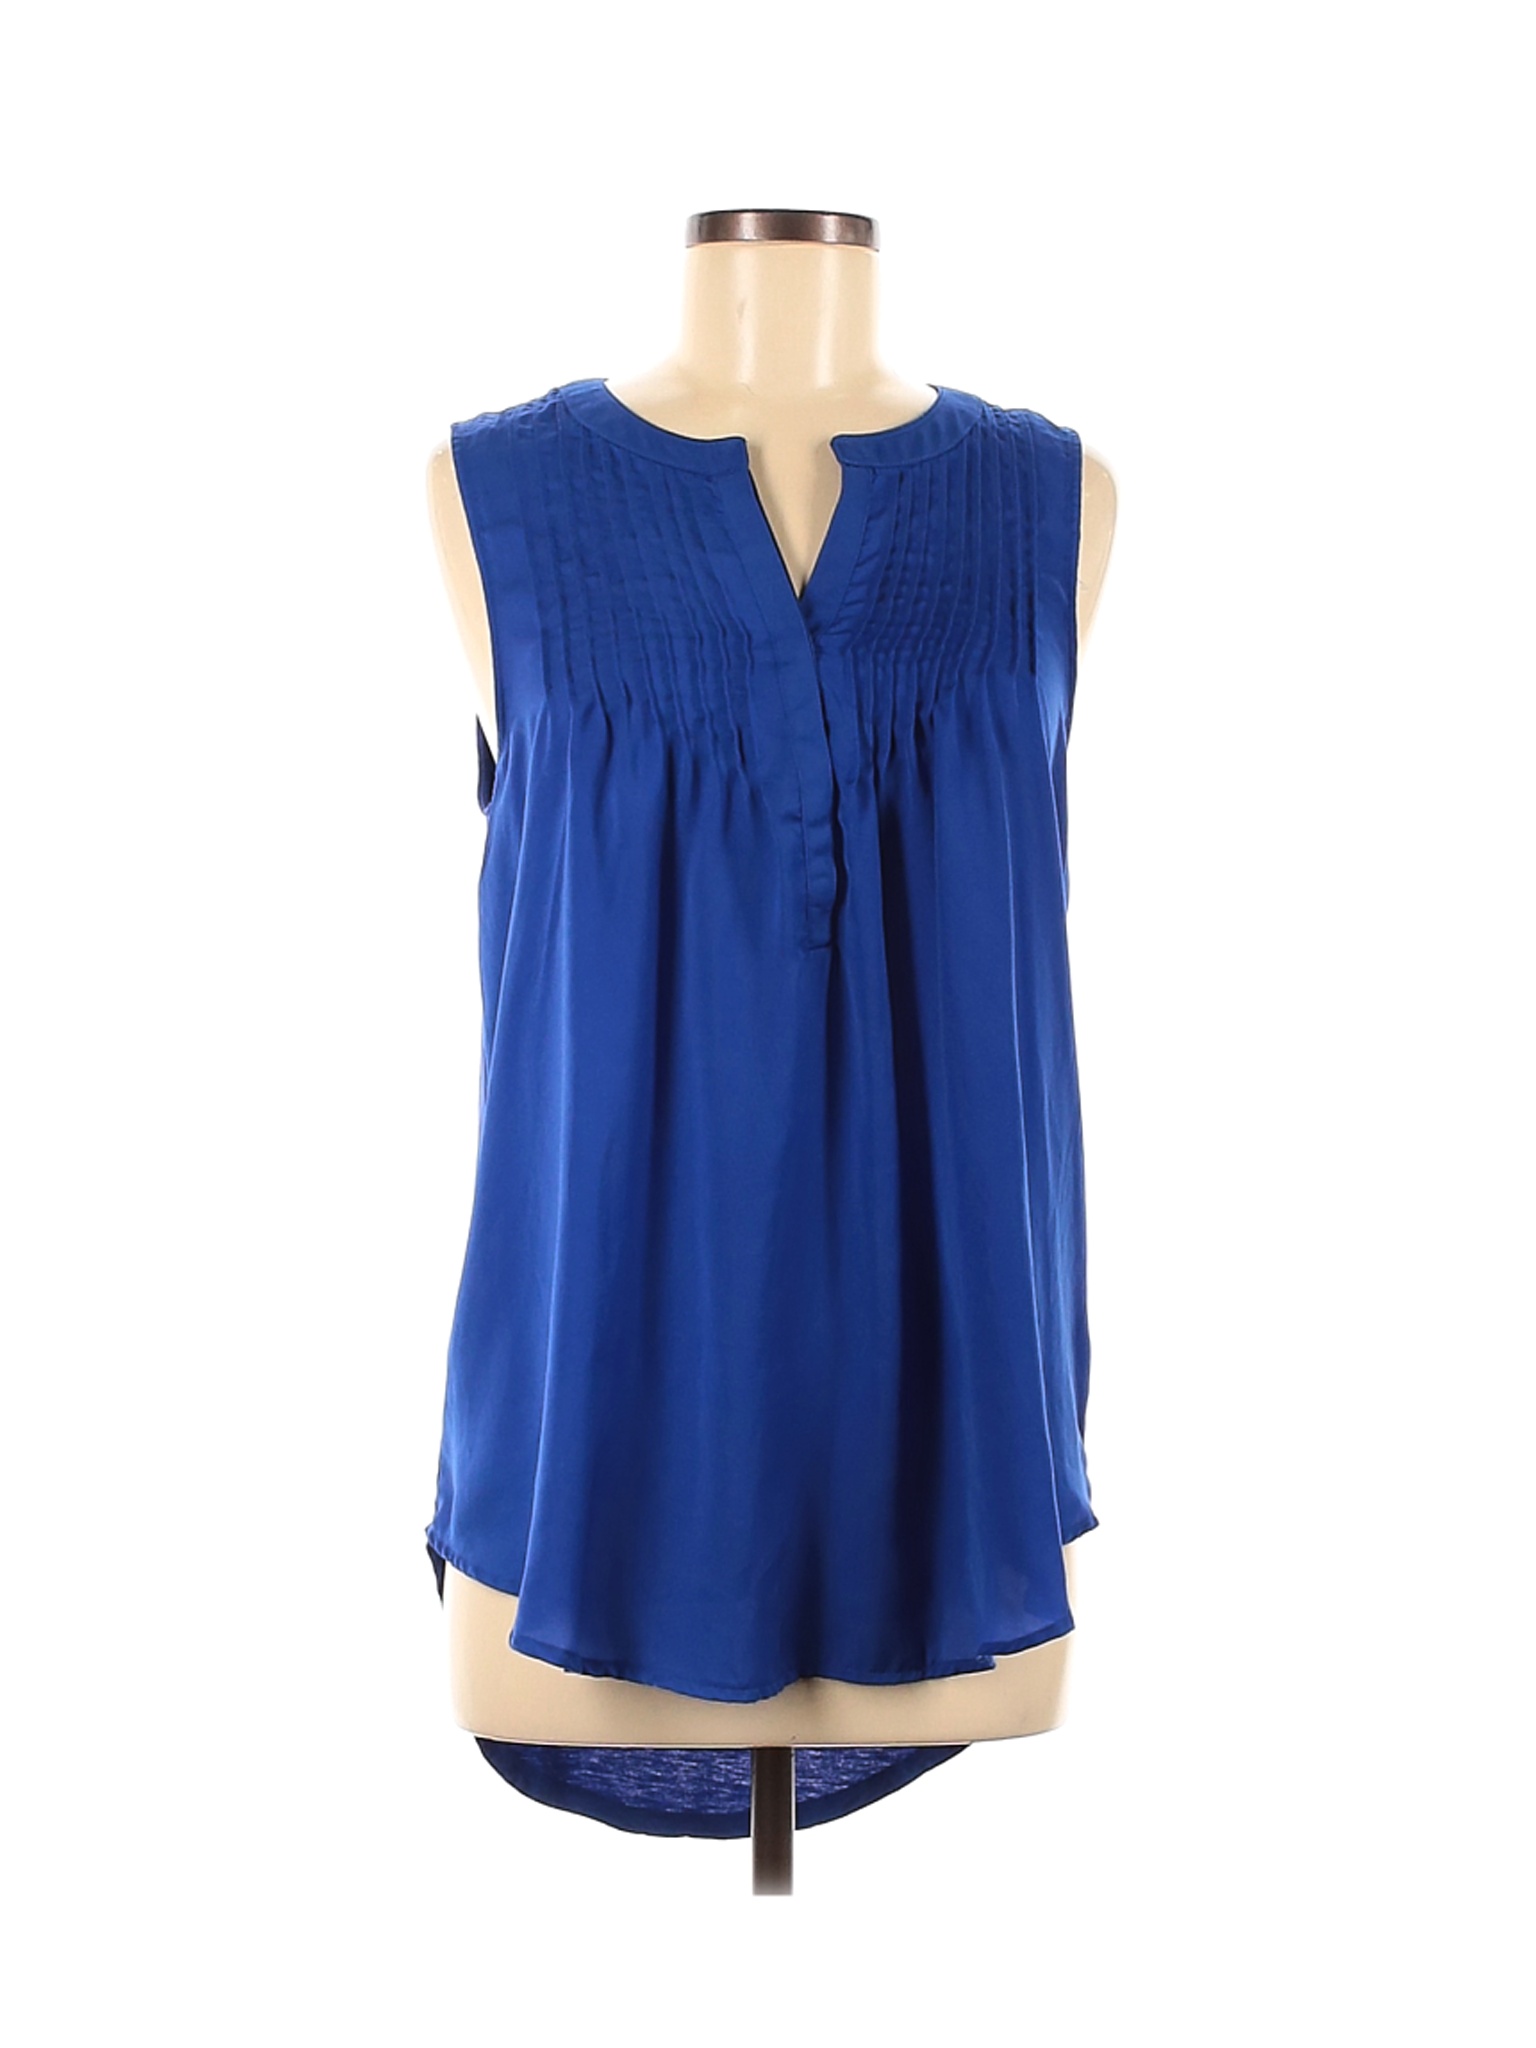 Merona Women Blue Sleeveless Blouse M | eBay